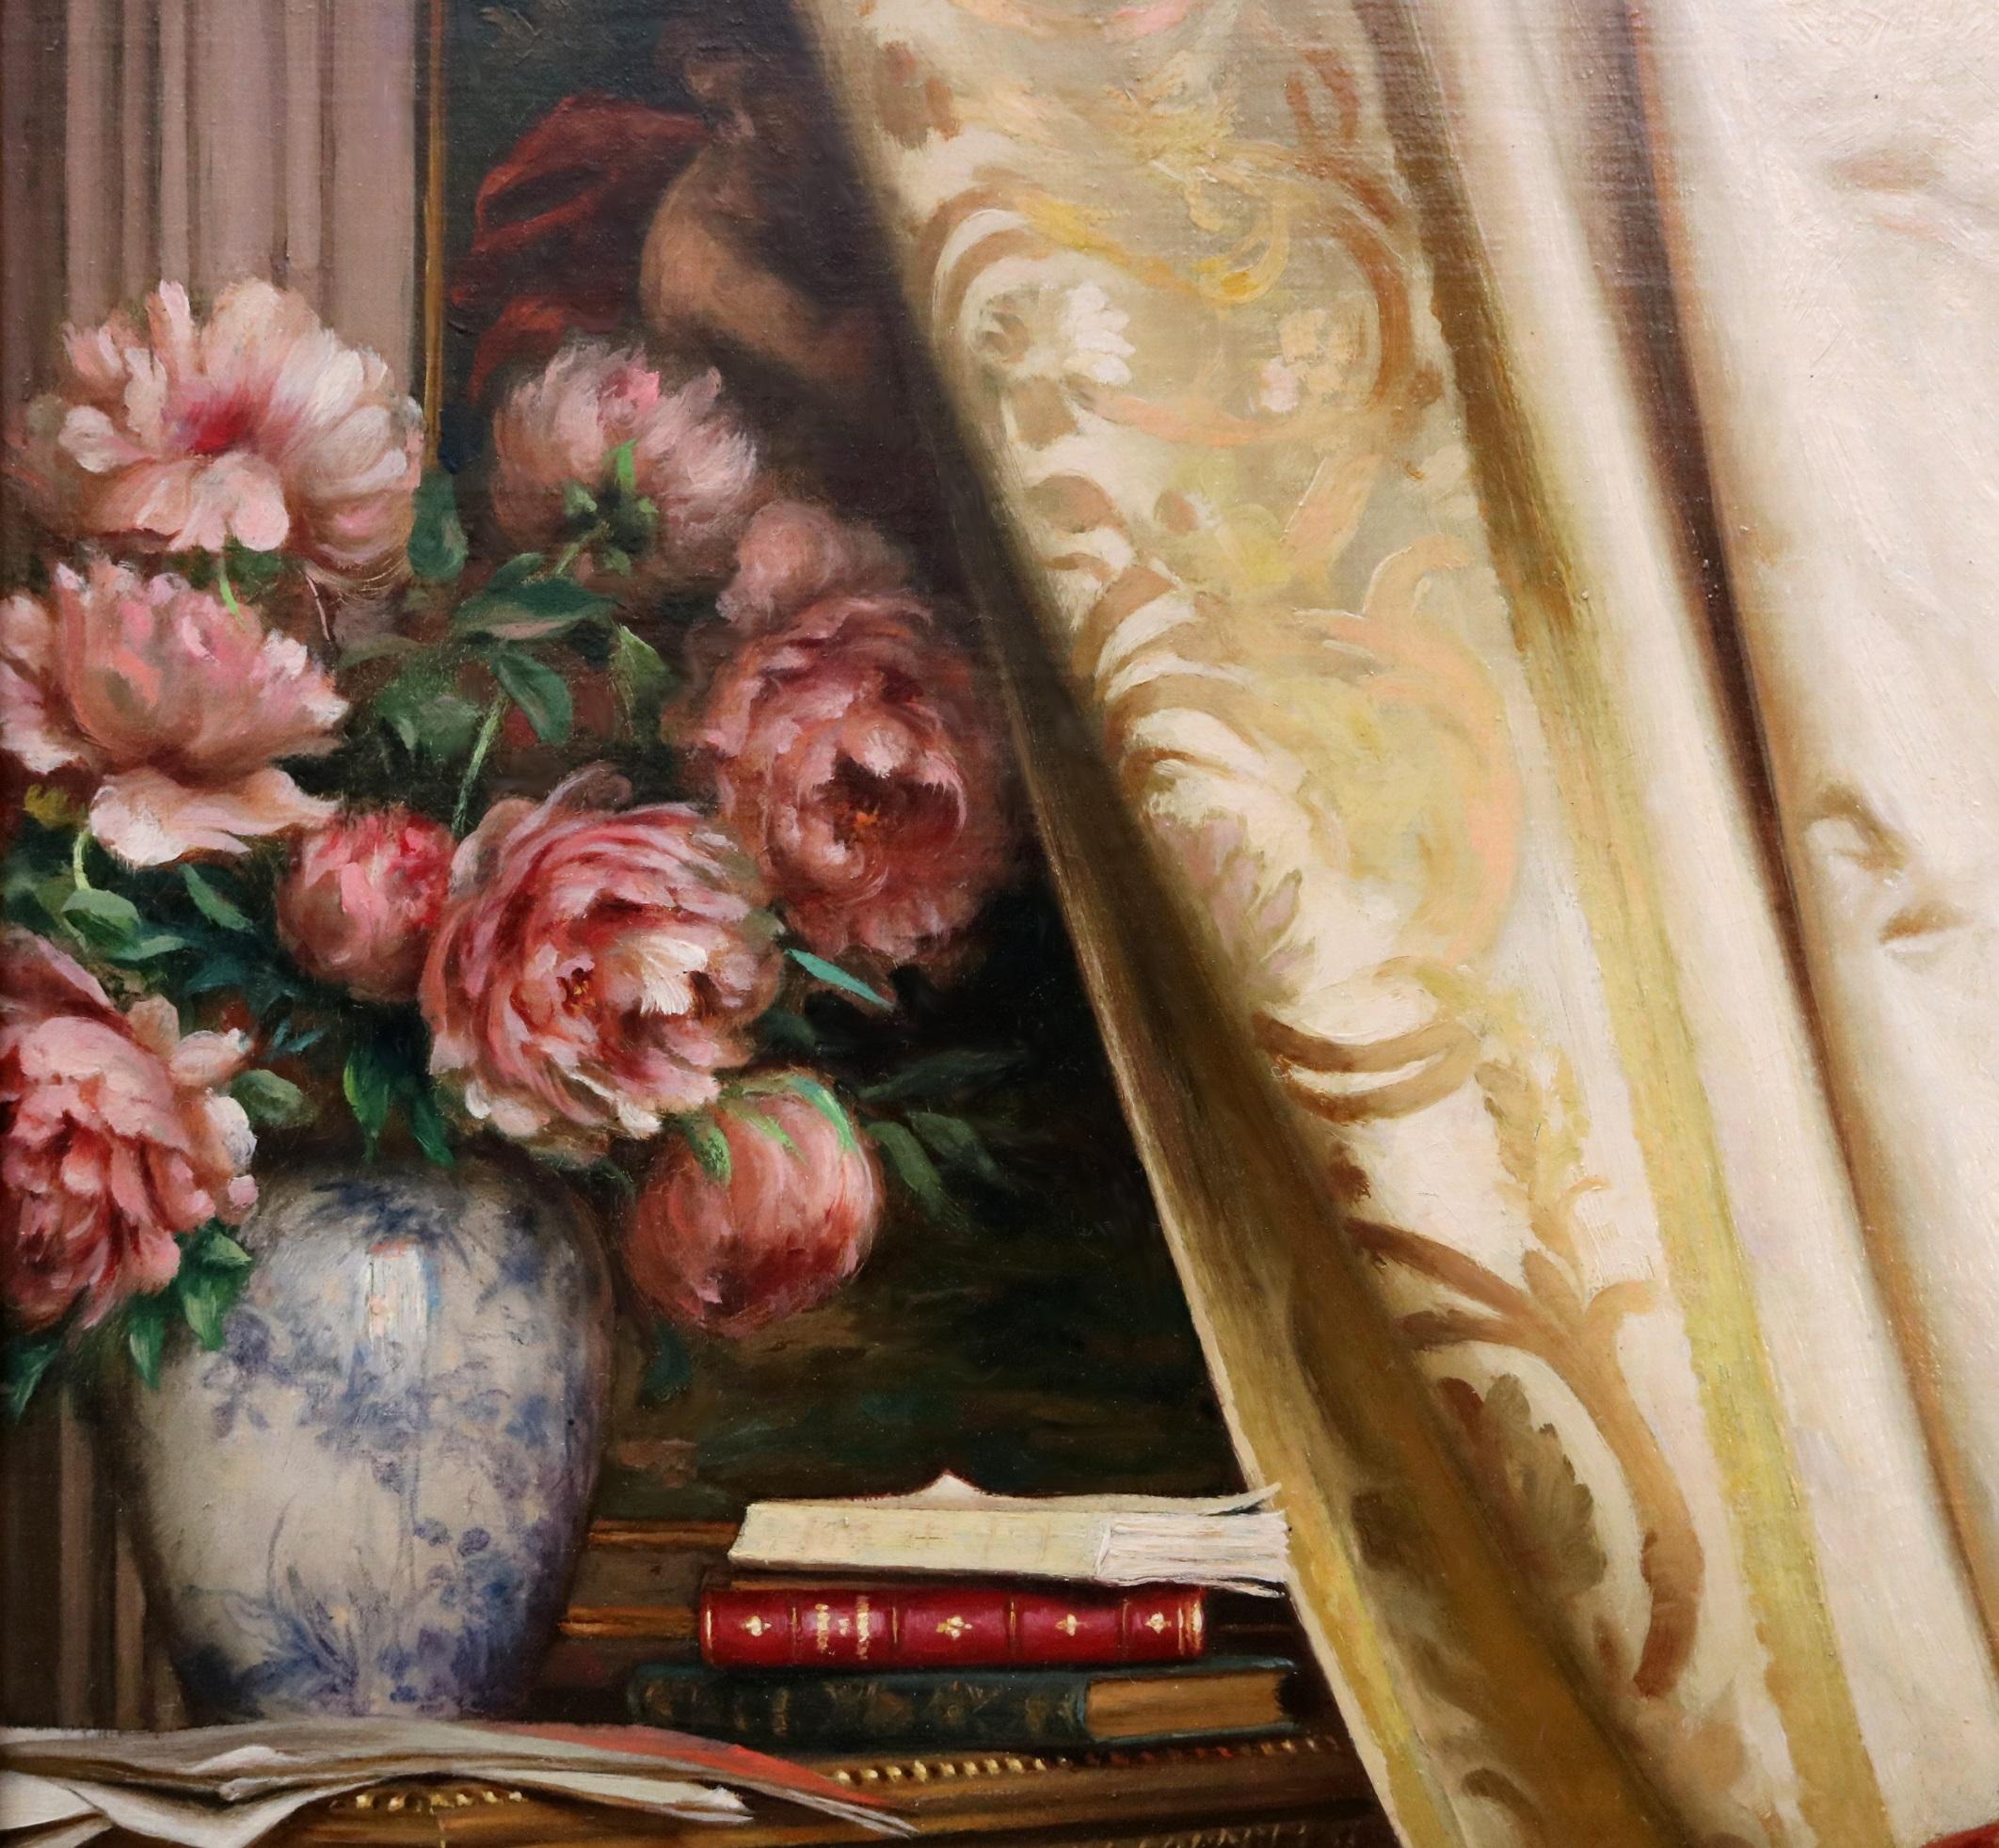 Regina dei Fiori - 19th Century Society Oil Painting Portrait of Italian Beauty For Sale 4